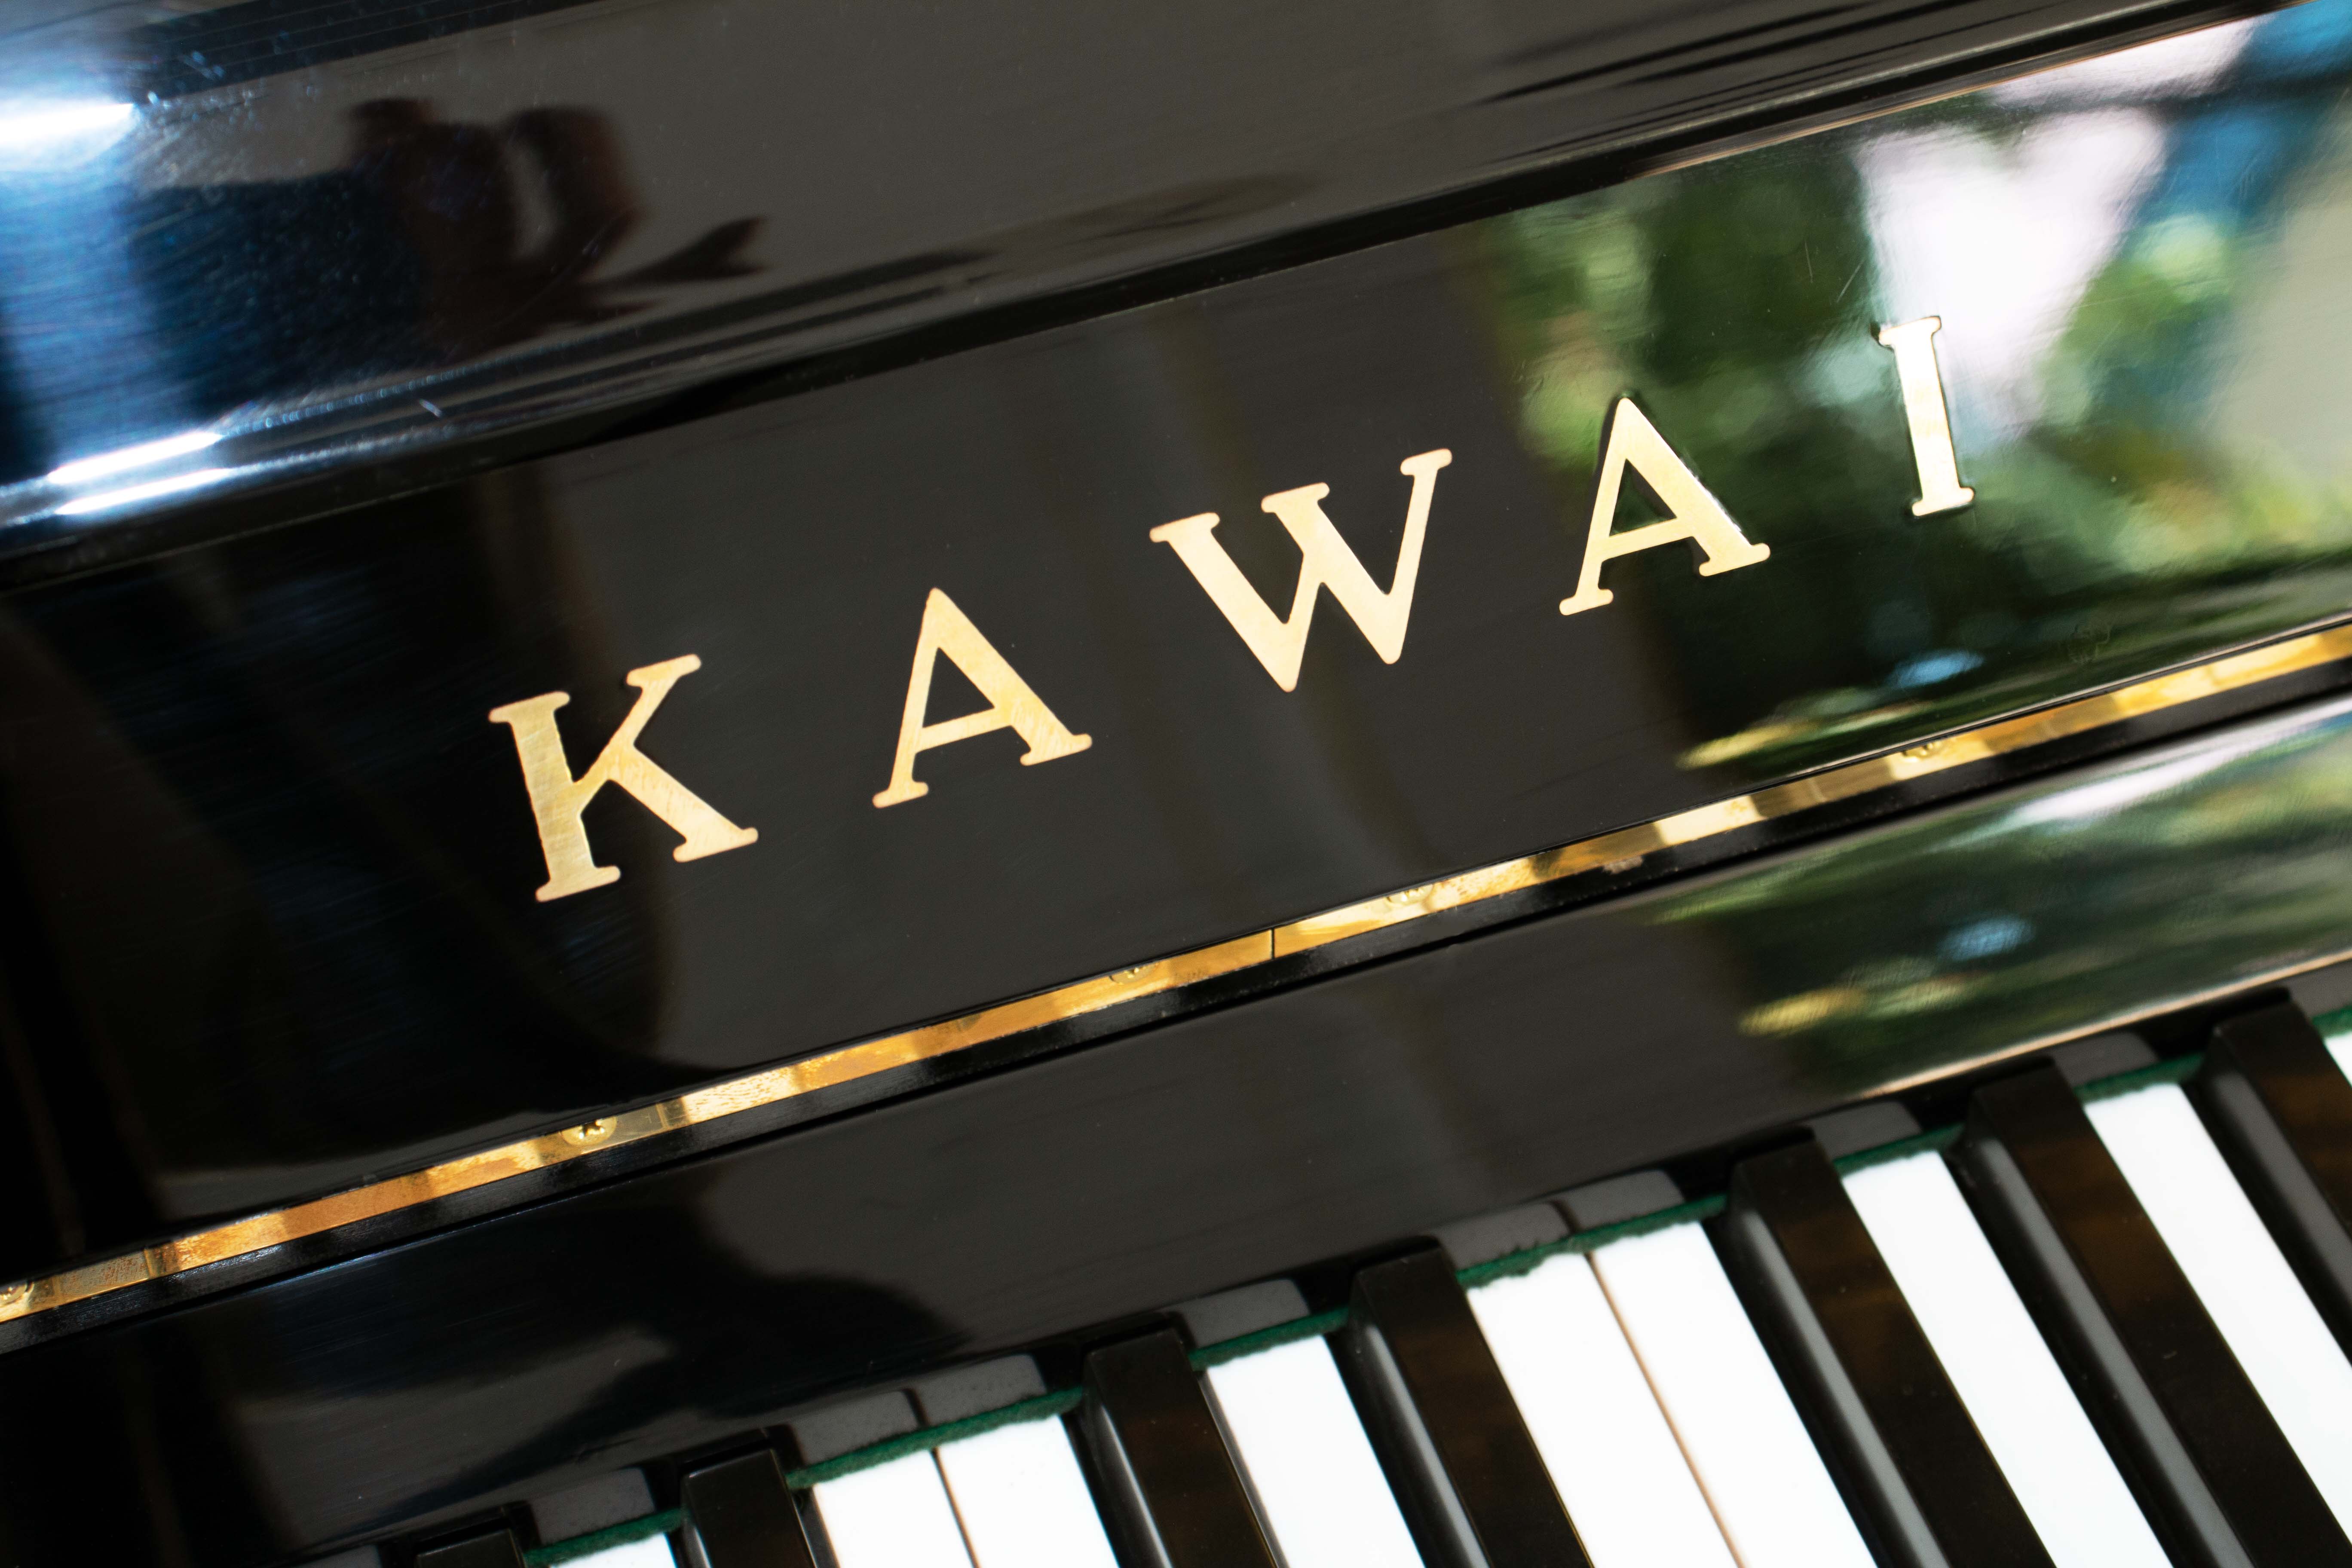 ĐÀN PIANO CƠ KAWAI BL61